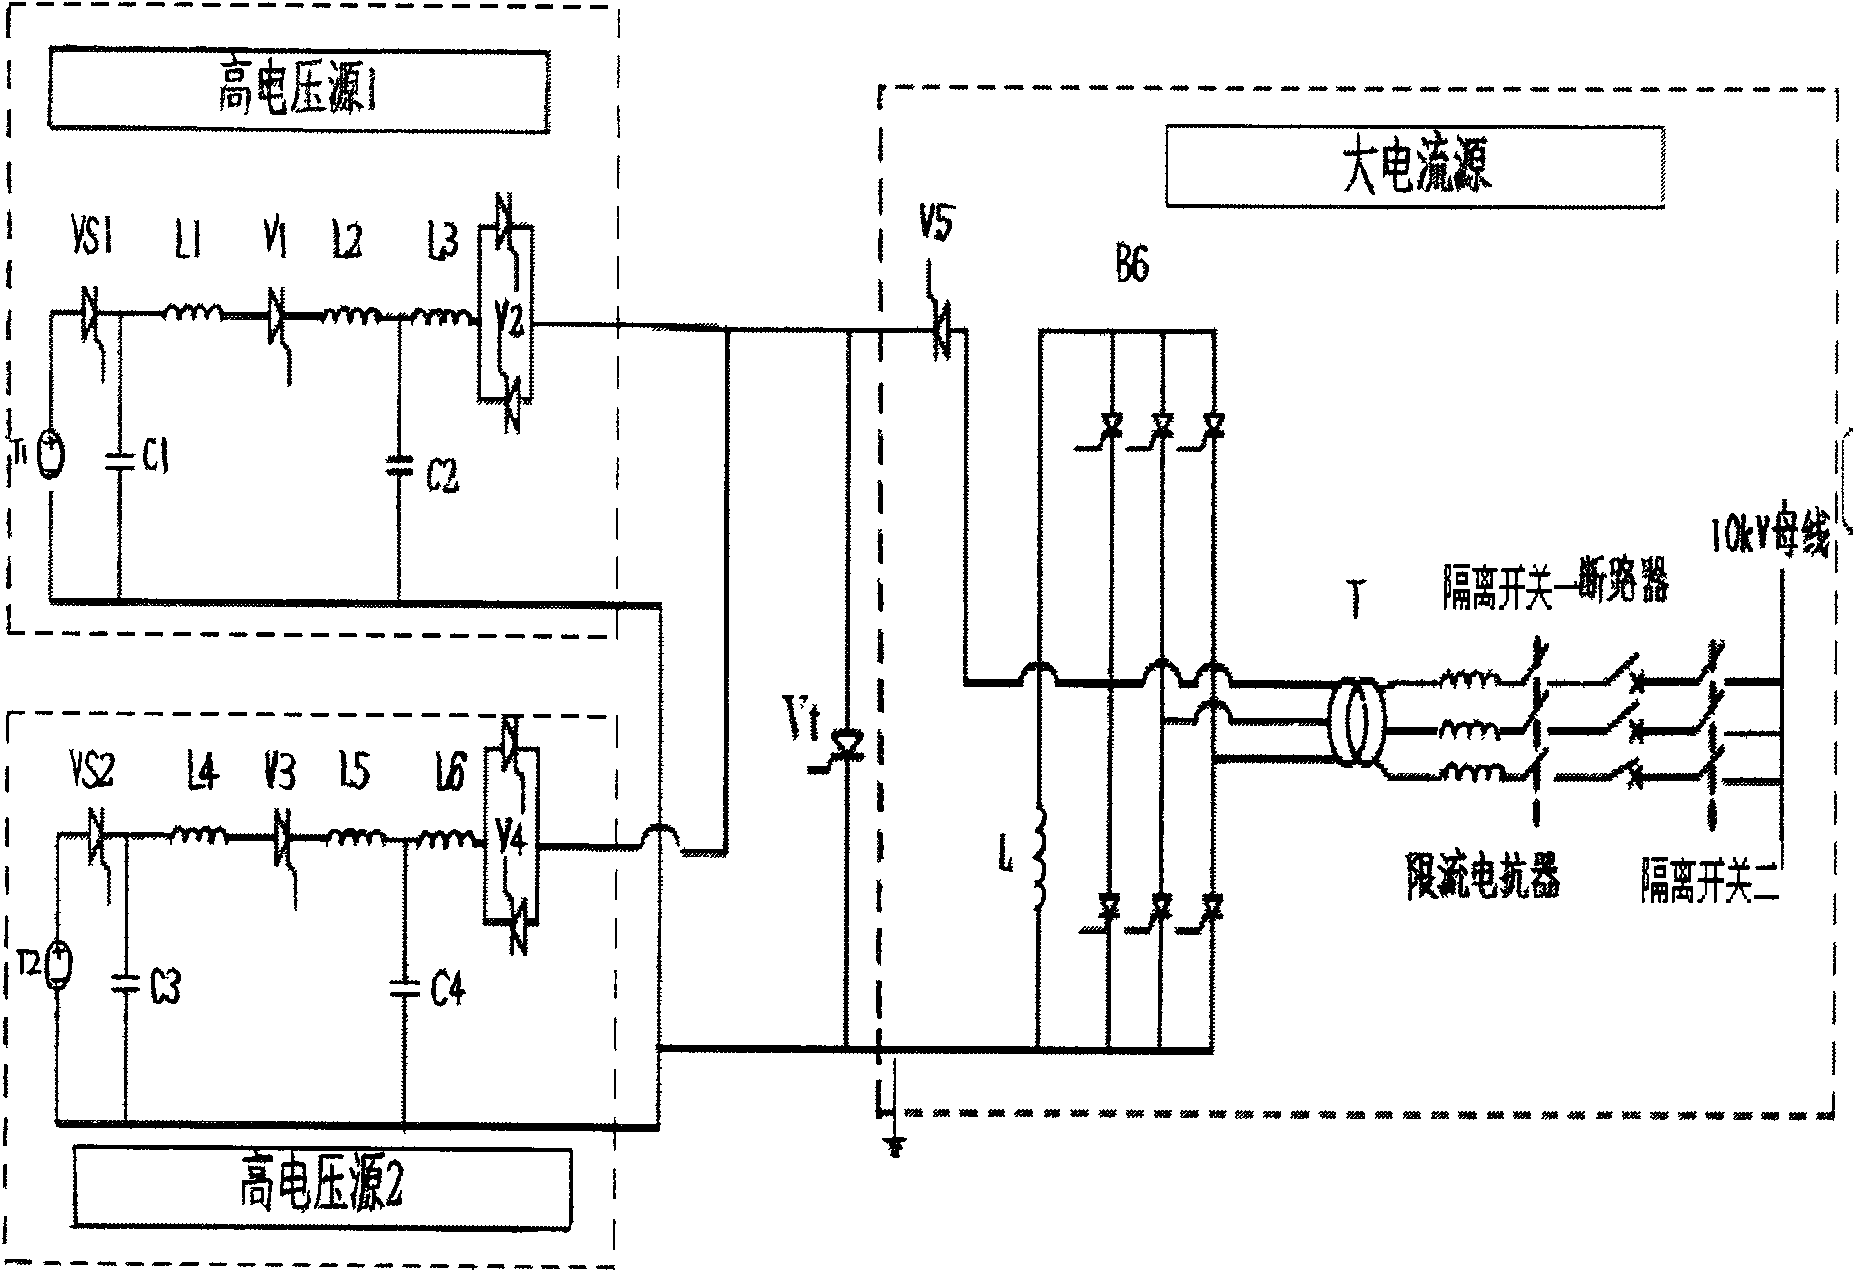 Composite test apparatus of high-voltage direct current transmission converter valve